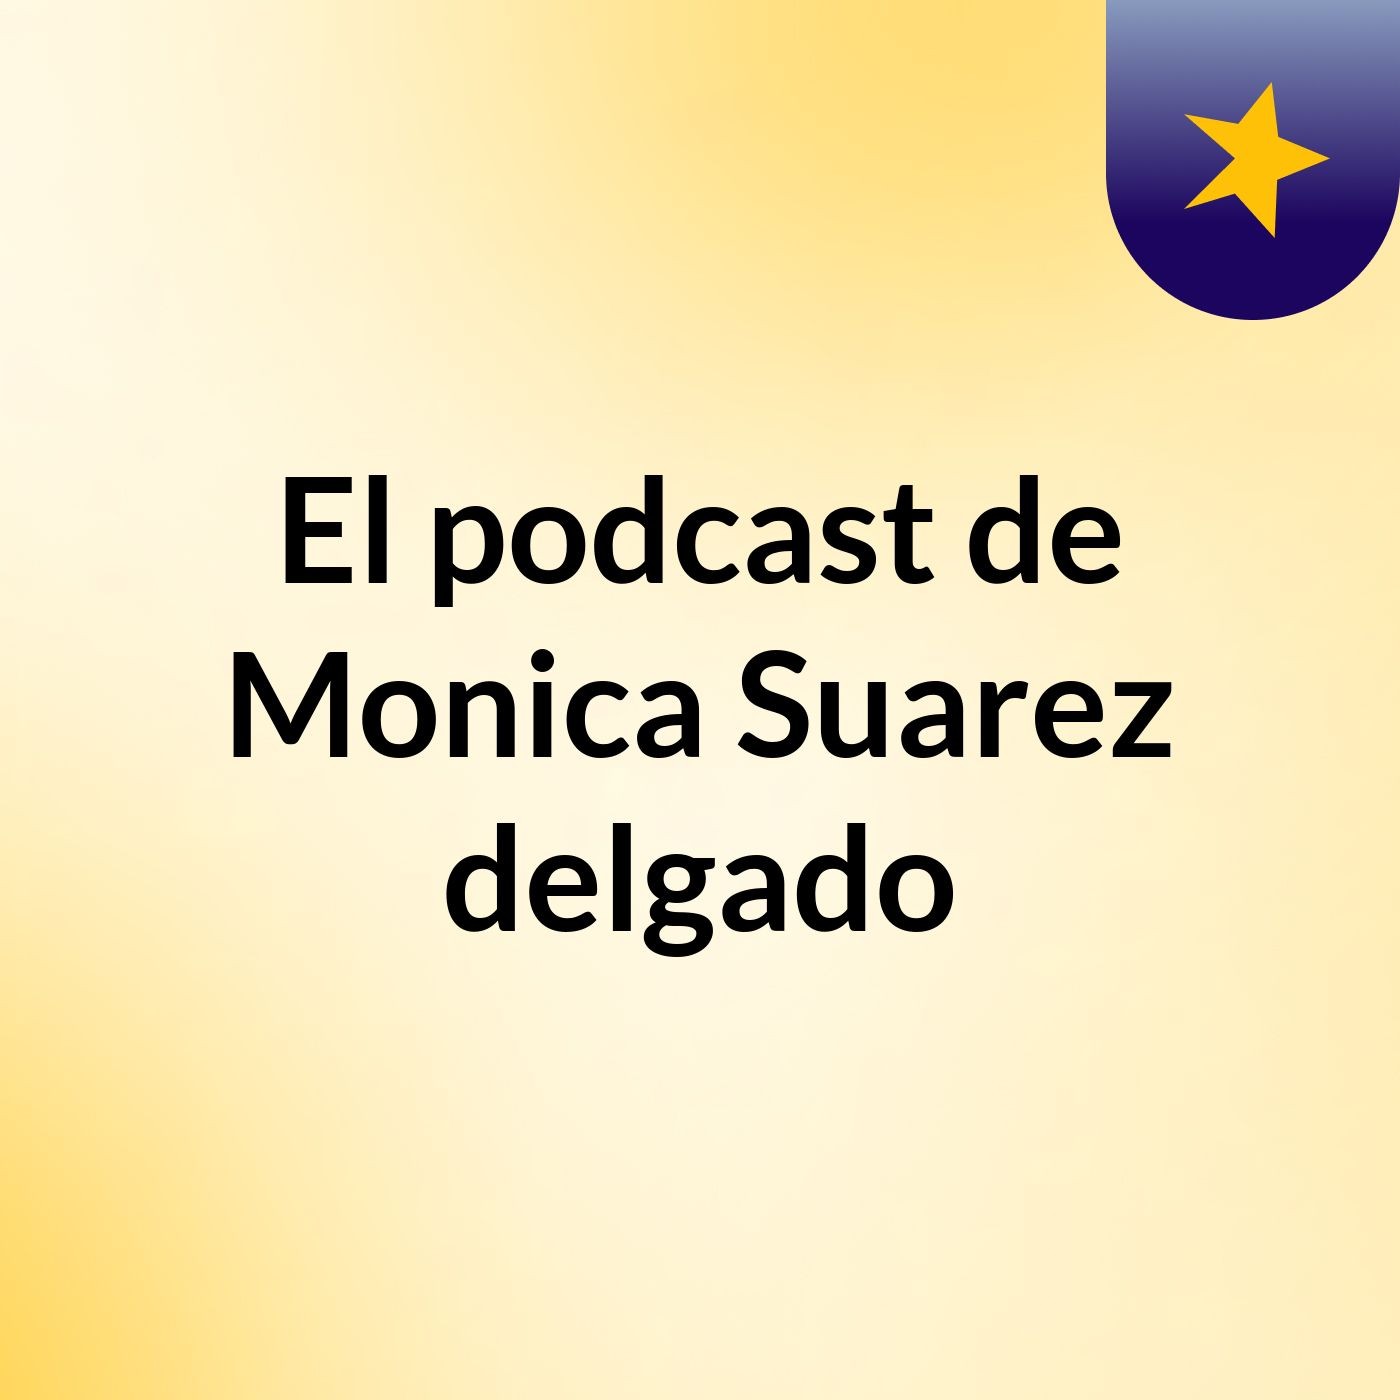 El podcast de Monica Suarez delgado